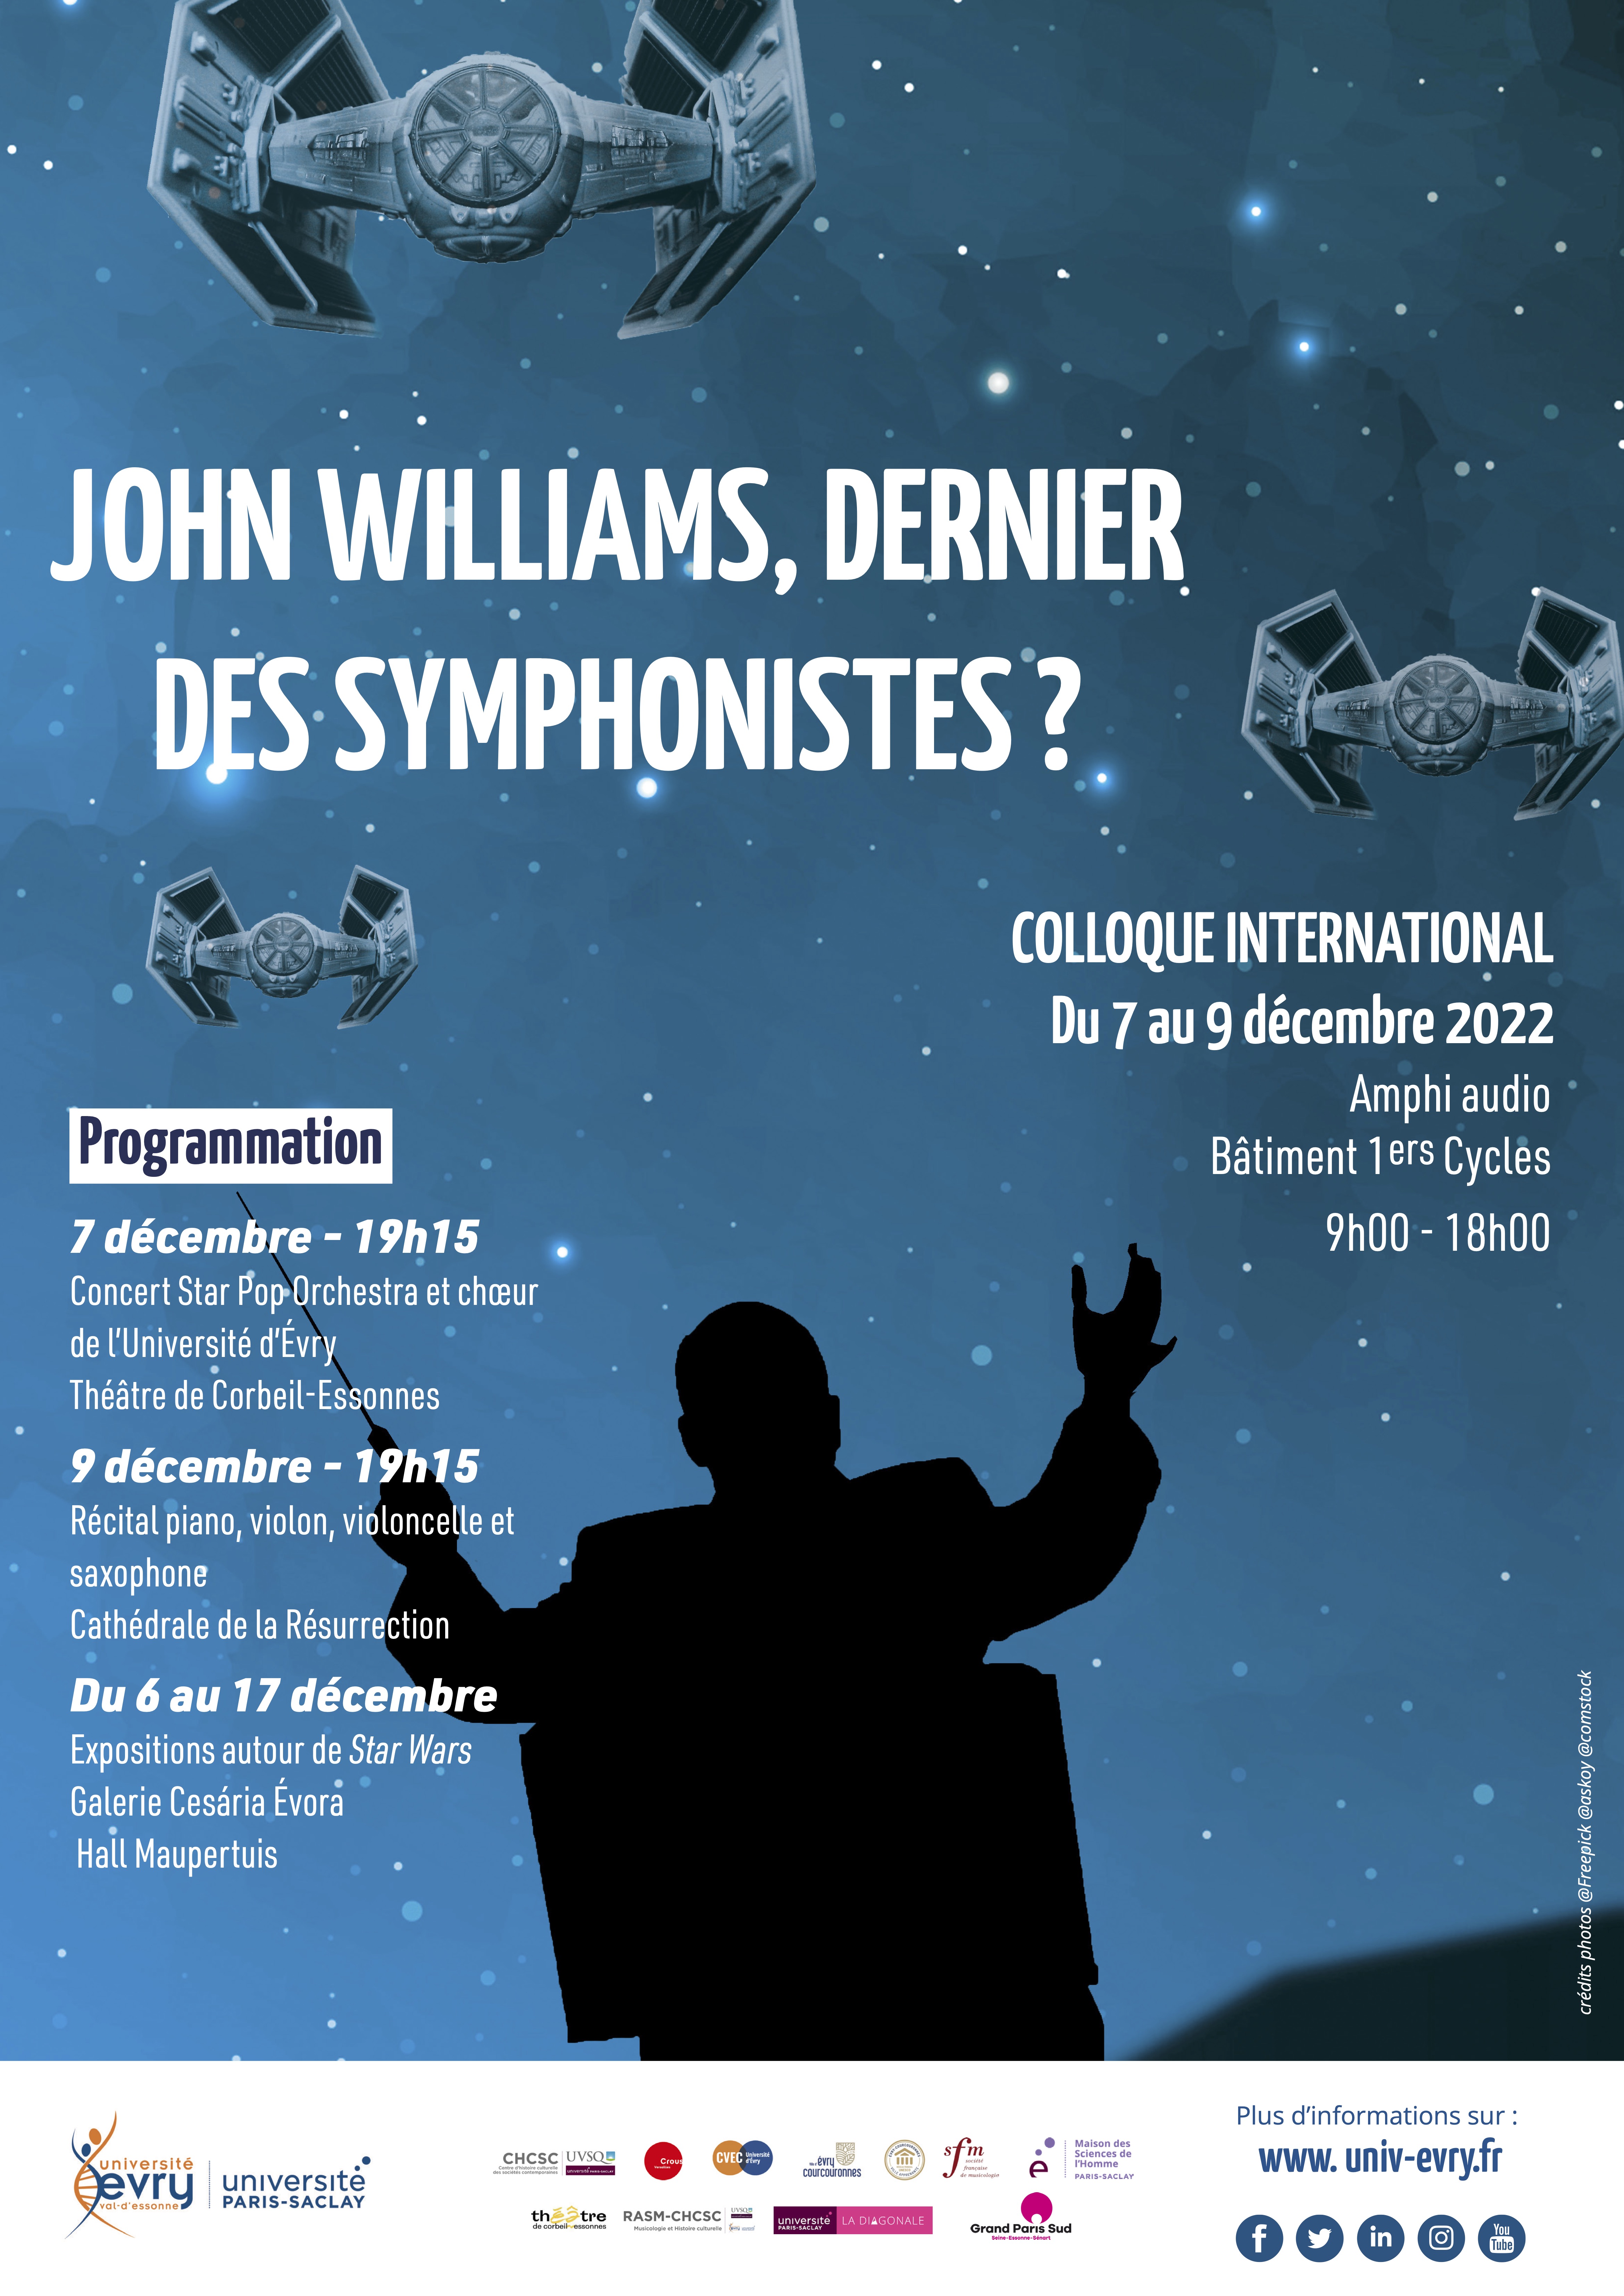 Programme Colloque international John Williams, dernier des symphonistes ? 